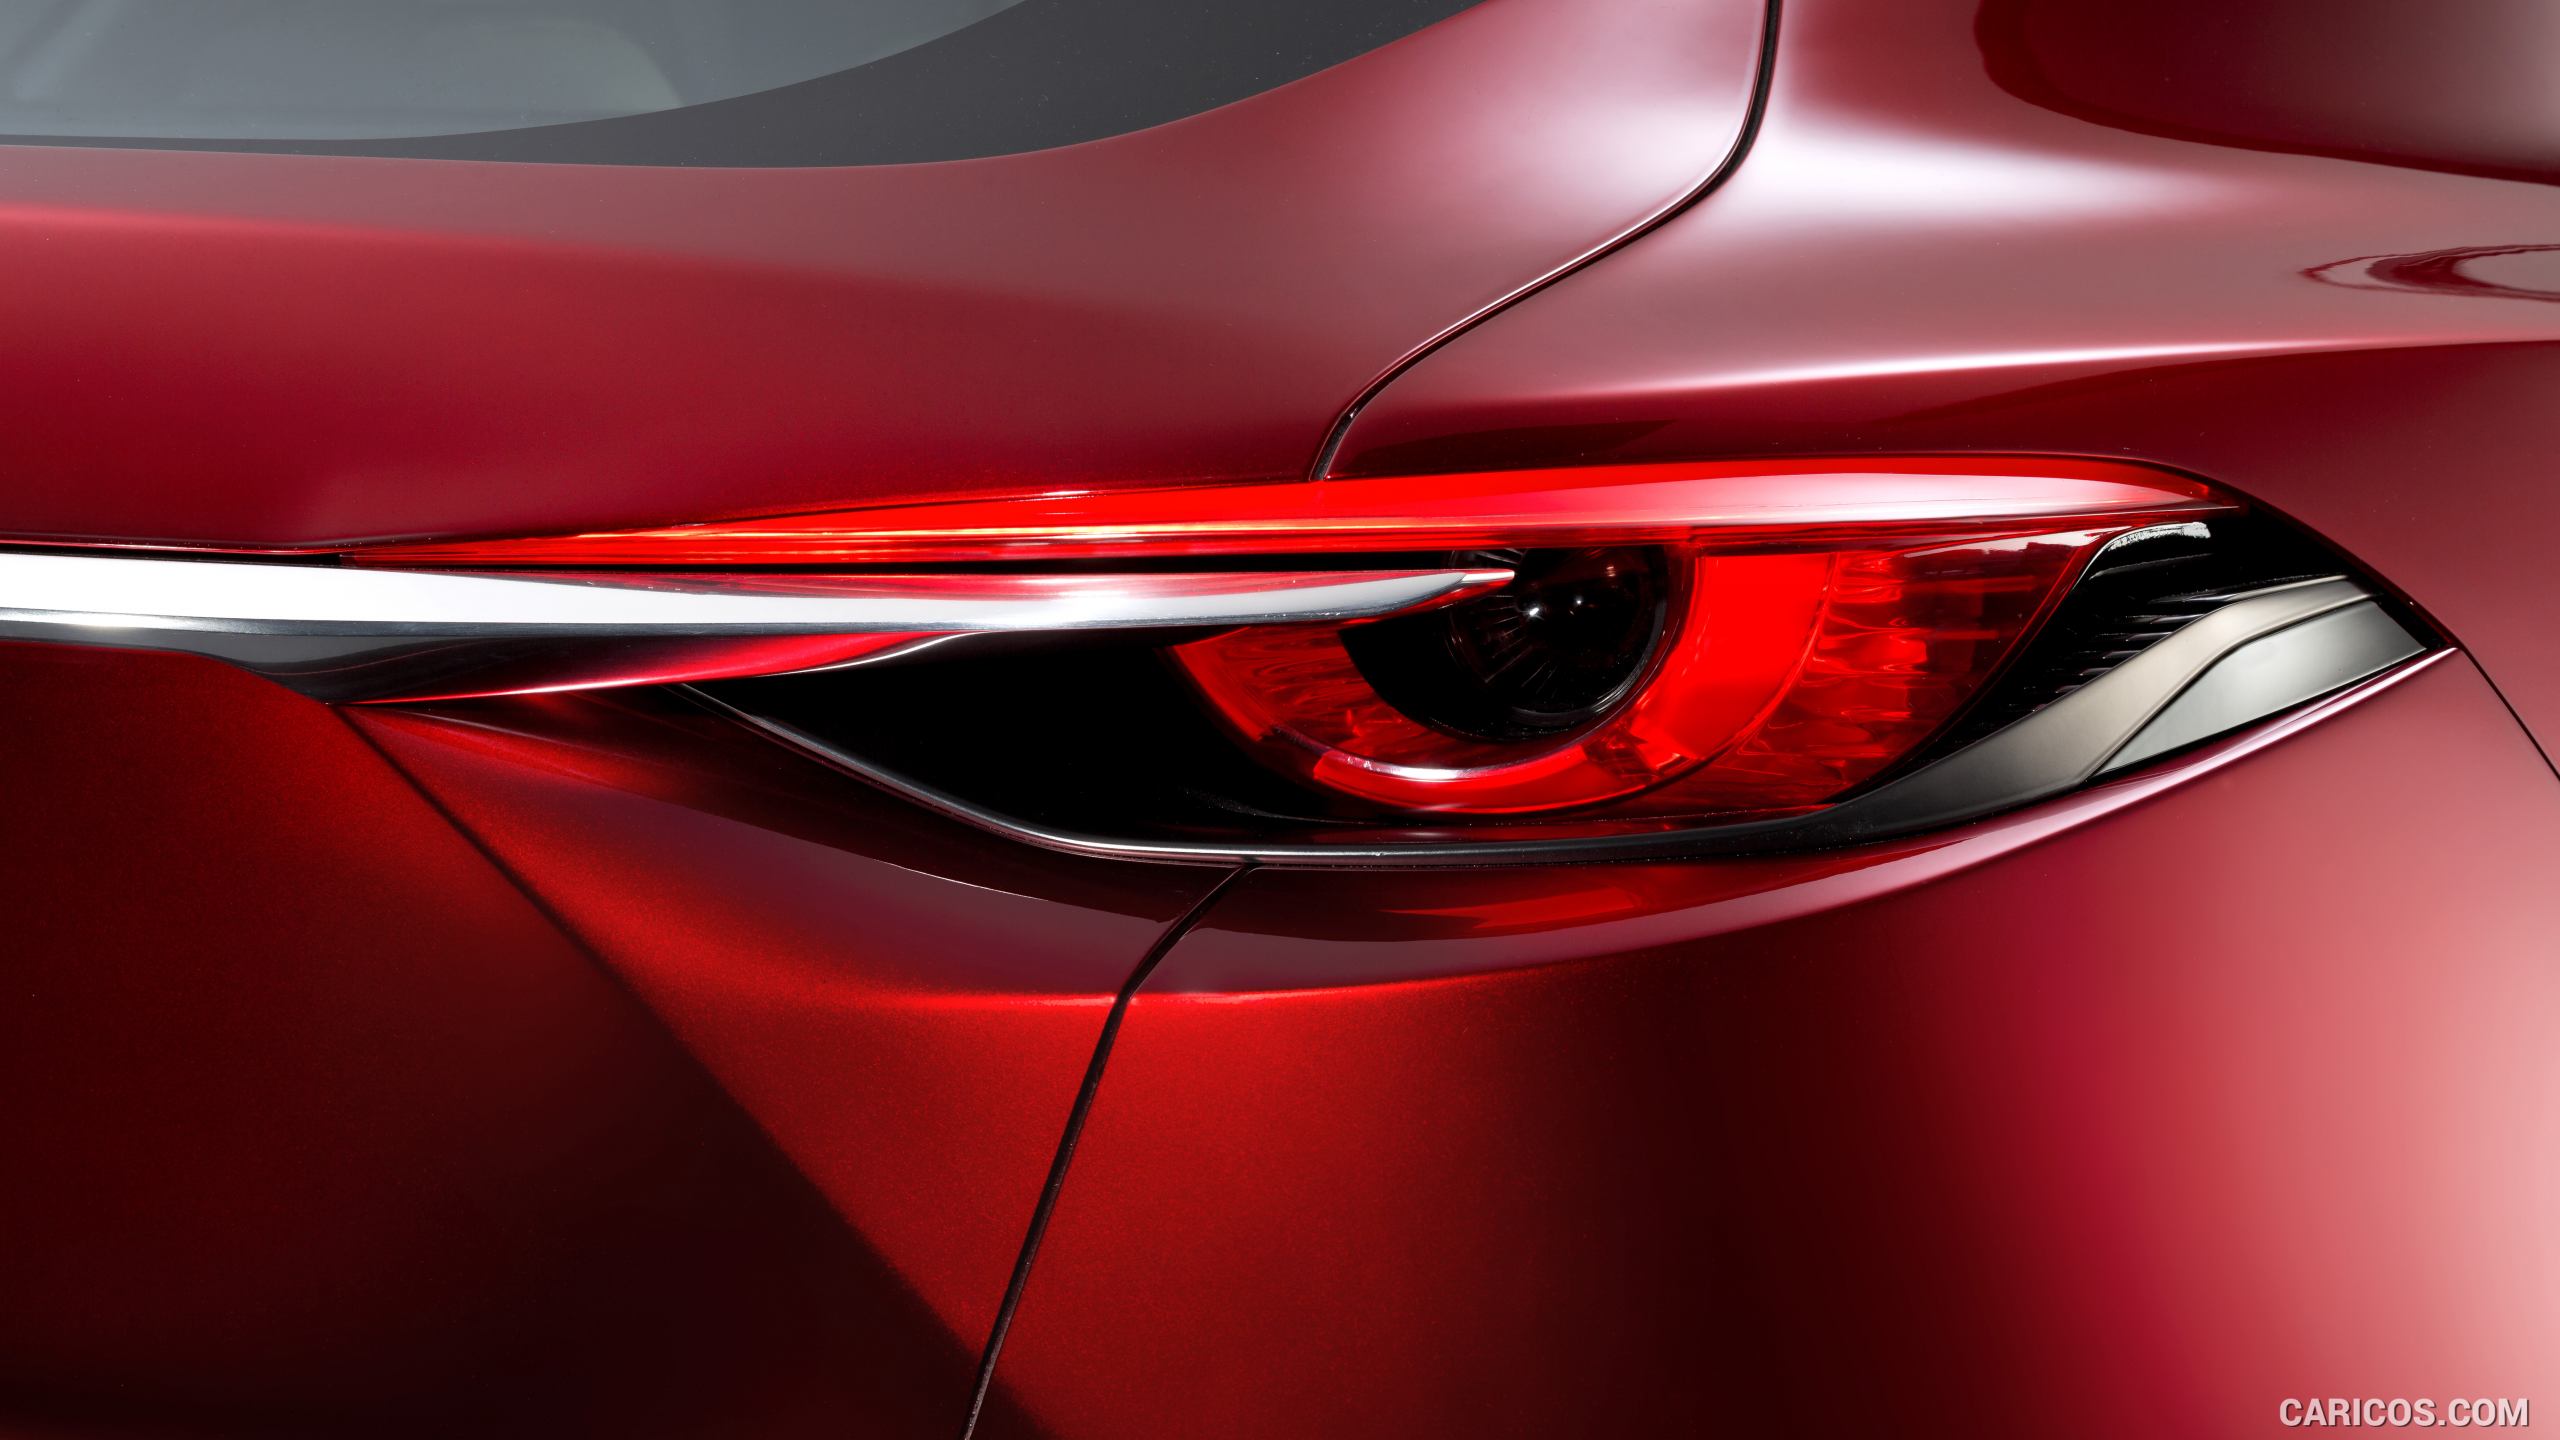 2015 Mazda Koeru Crossover Concept - Tail Light, #14 of 17